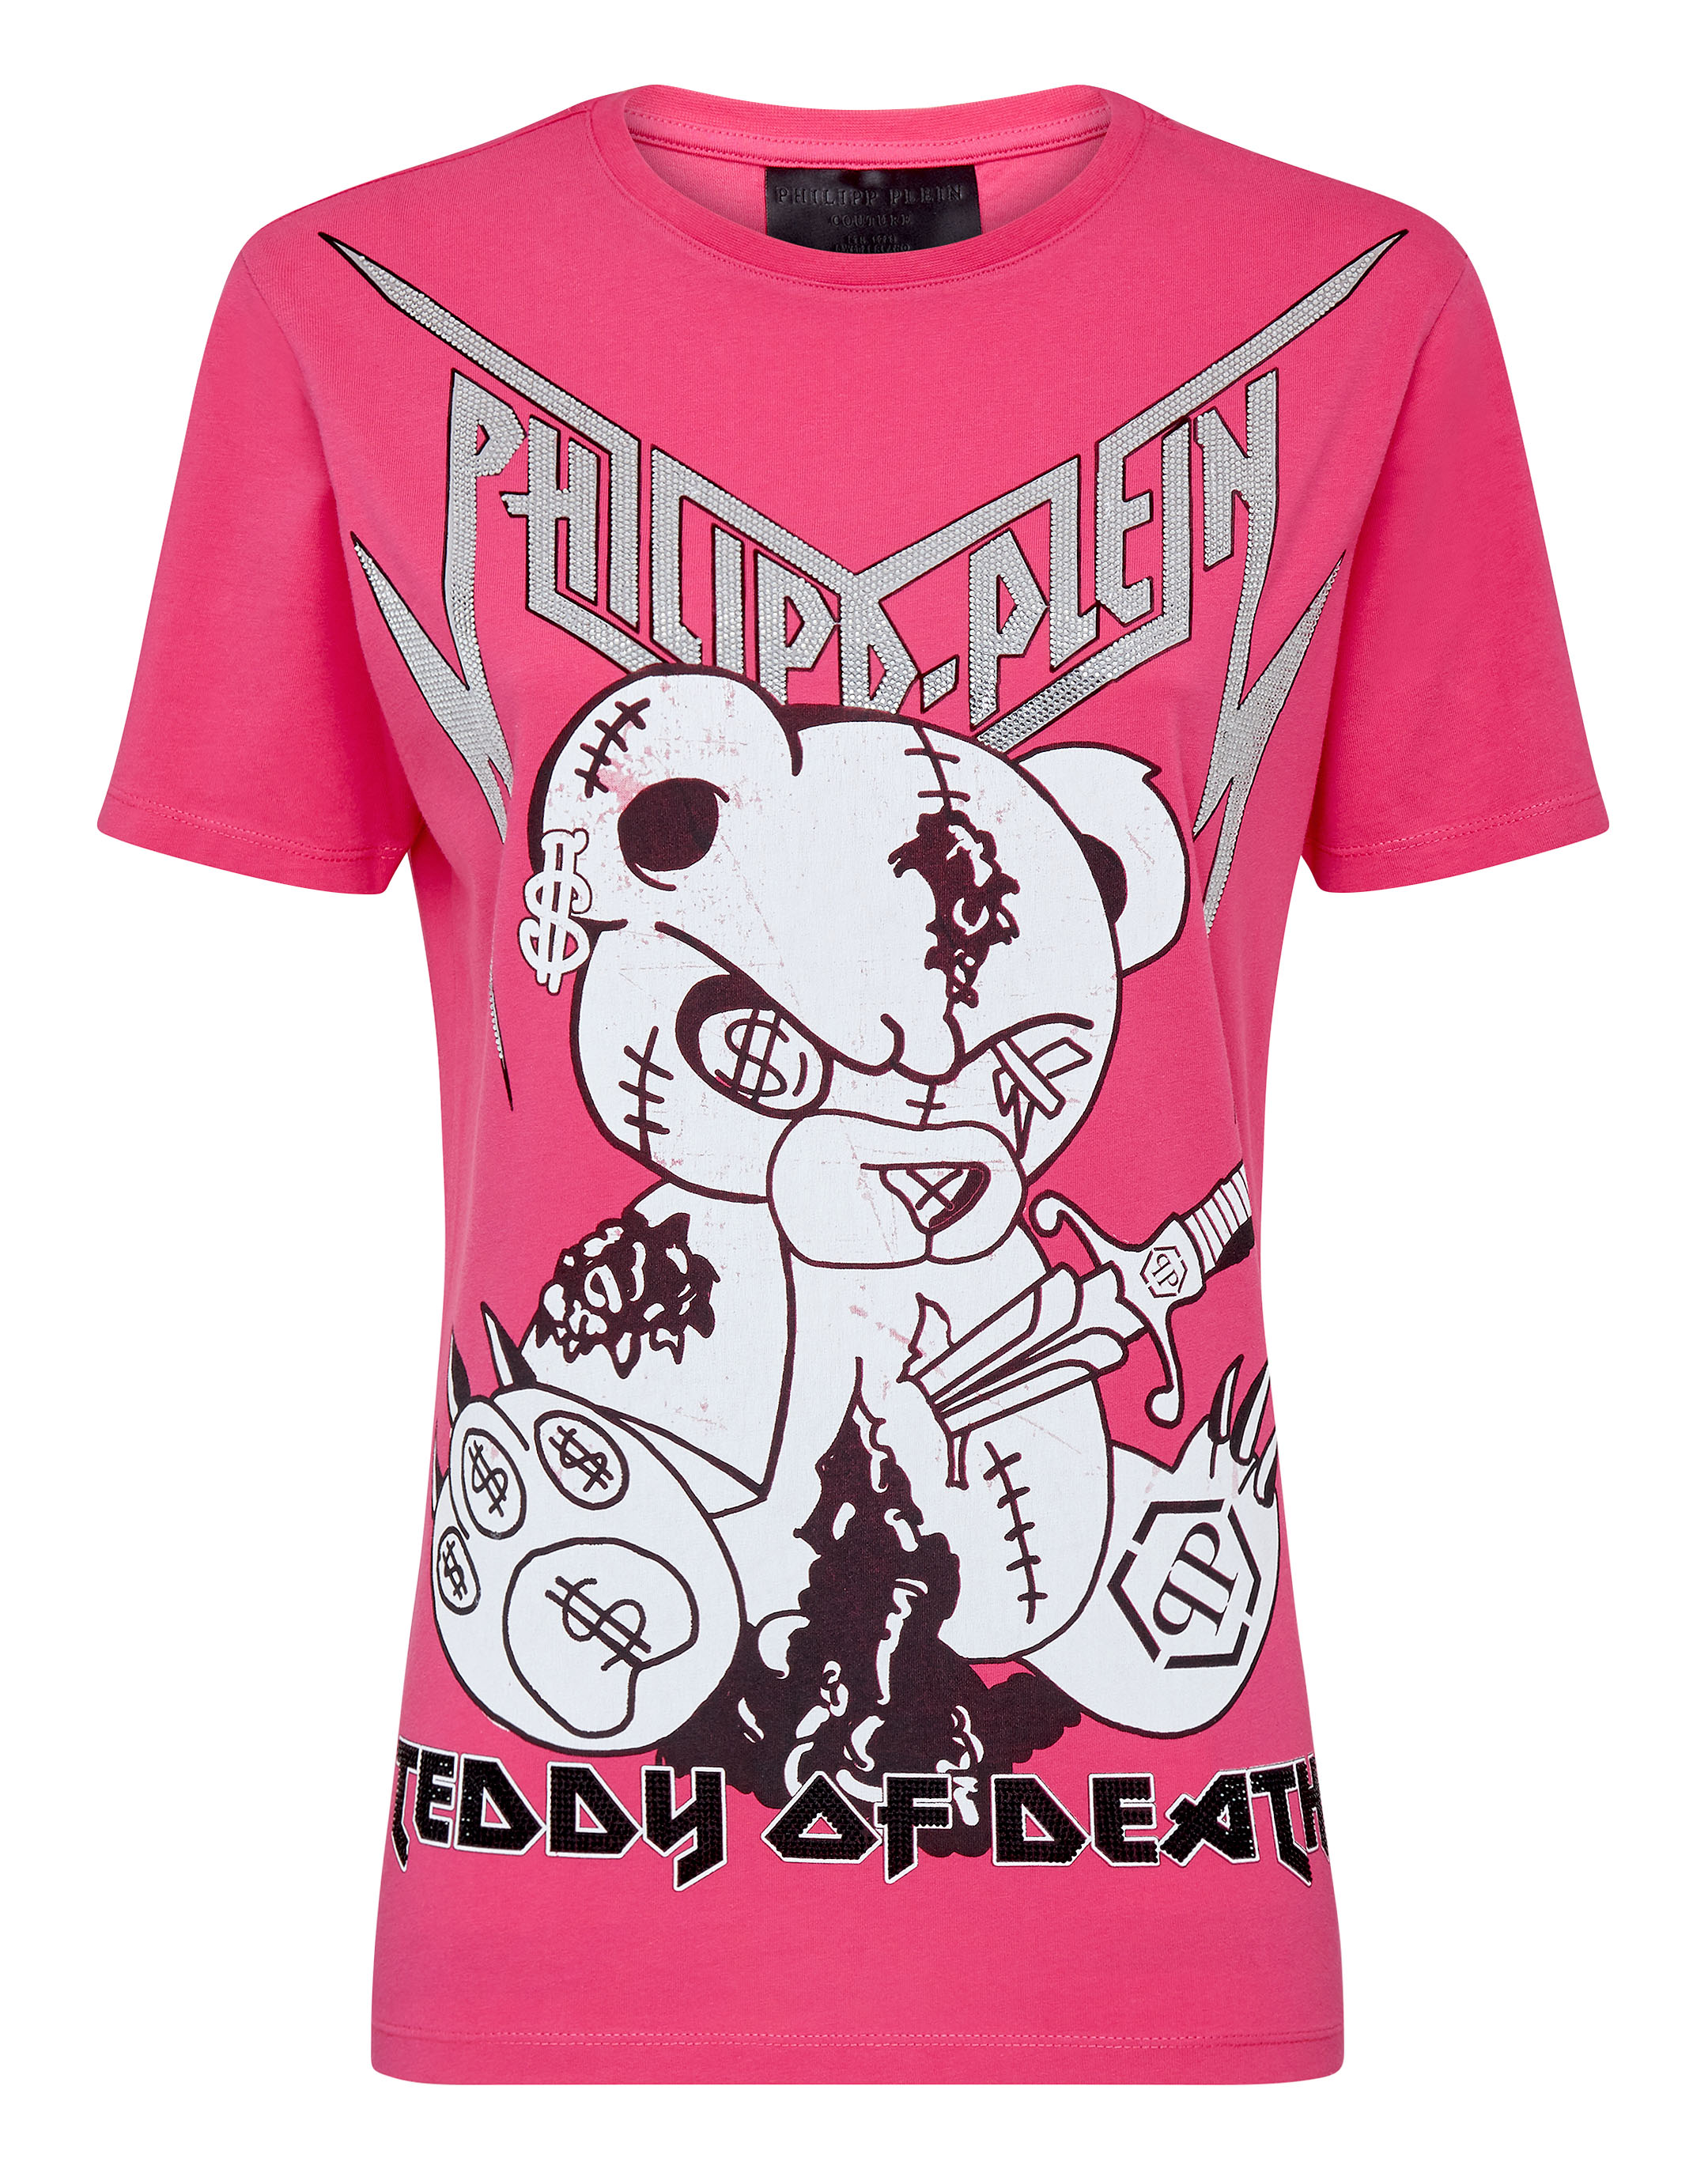 philipp plein t shirt teddy